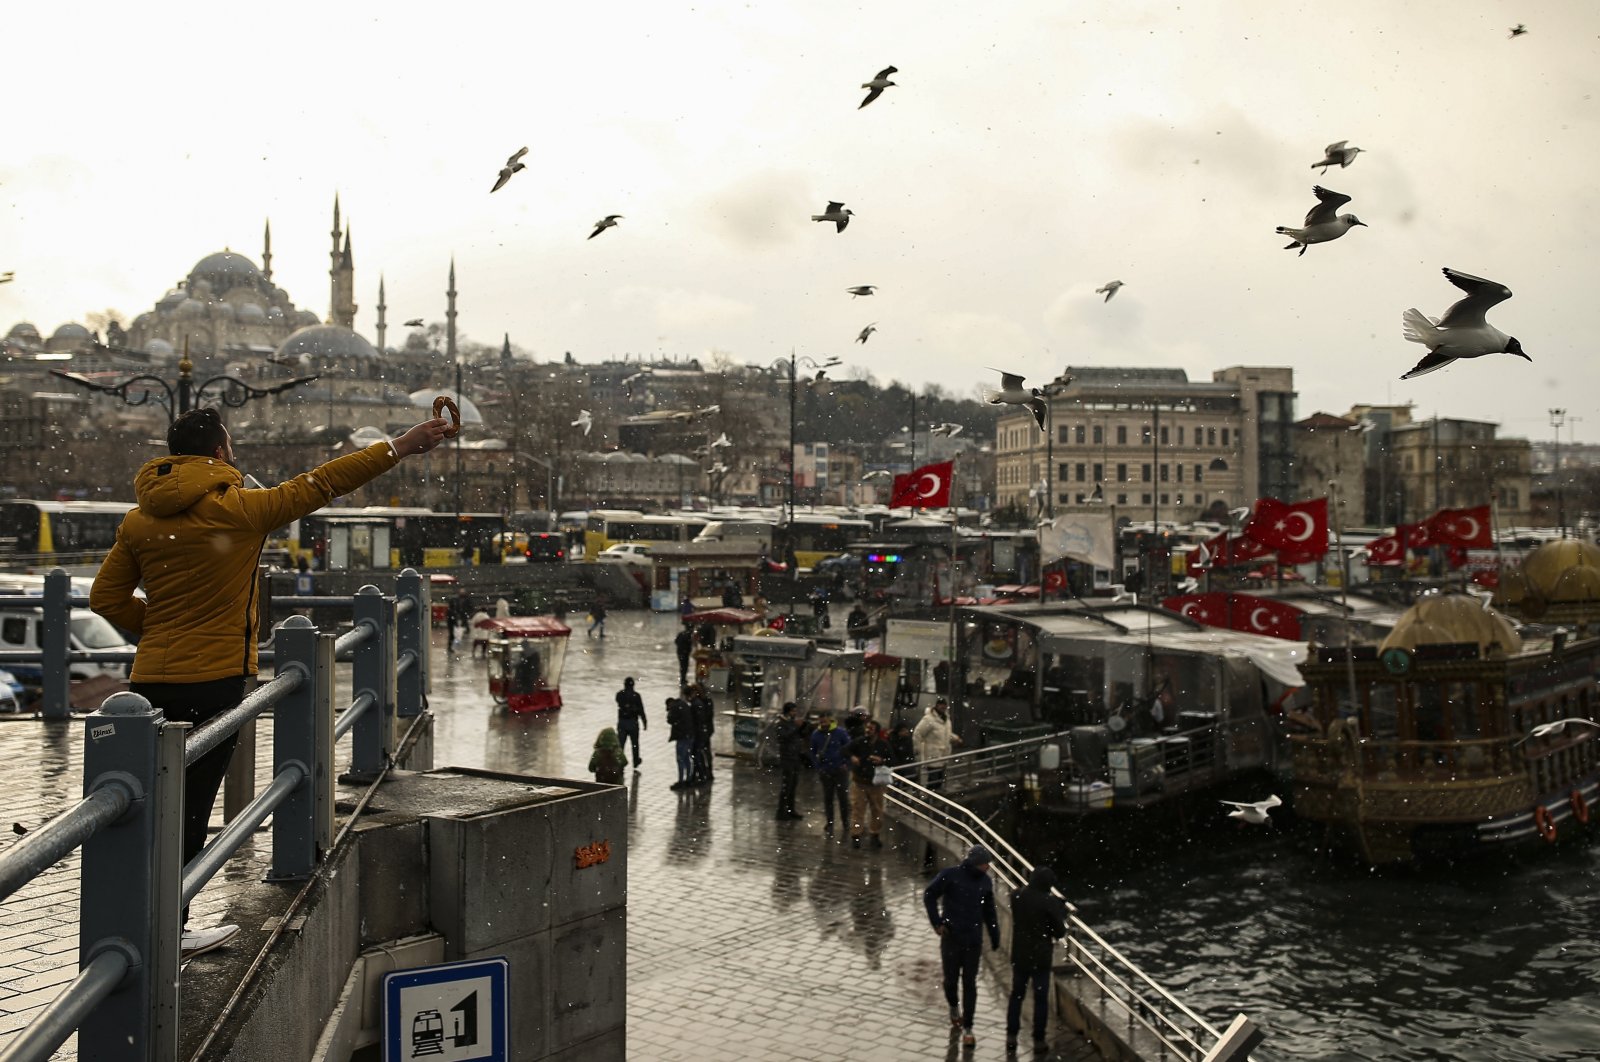 A man feeds seagulls in Eminönü in Istanbul, Turkey, March 10, 2022. (AP Photo)